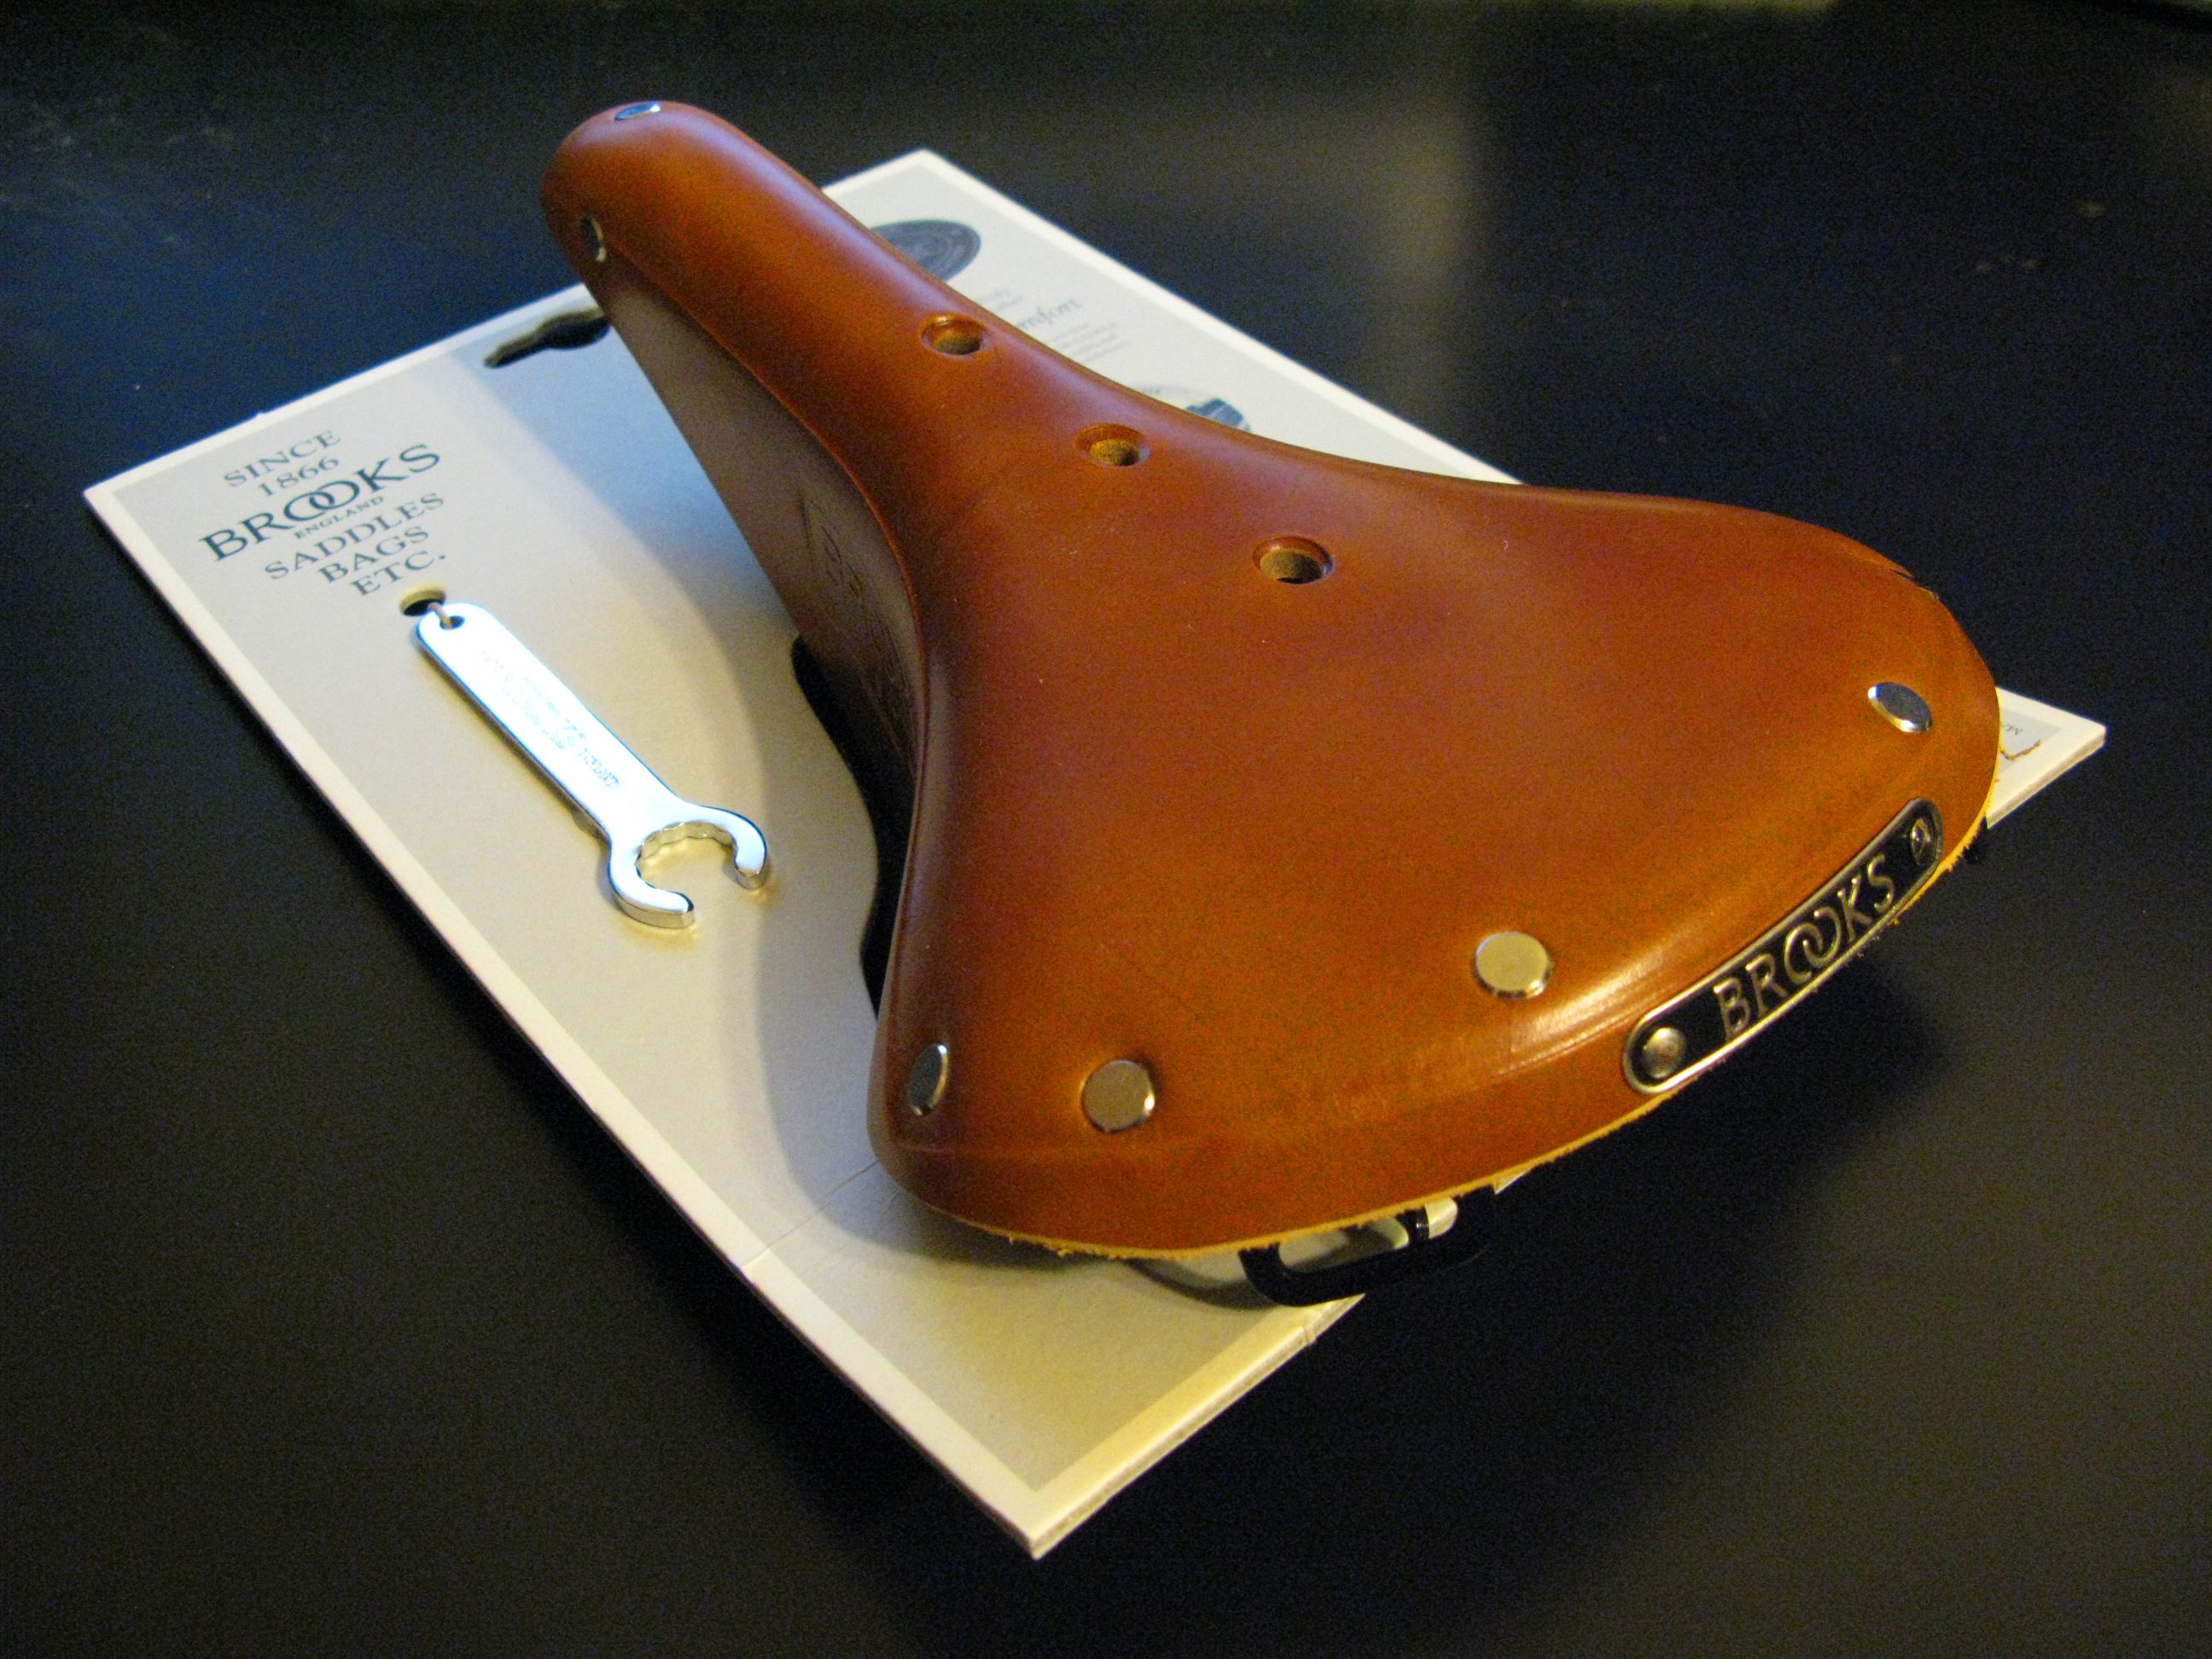 A Brooks Genuine Leather Saddle